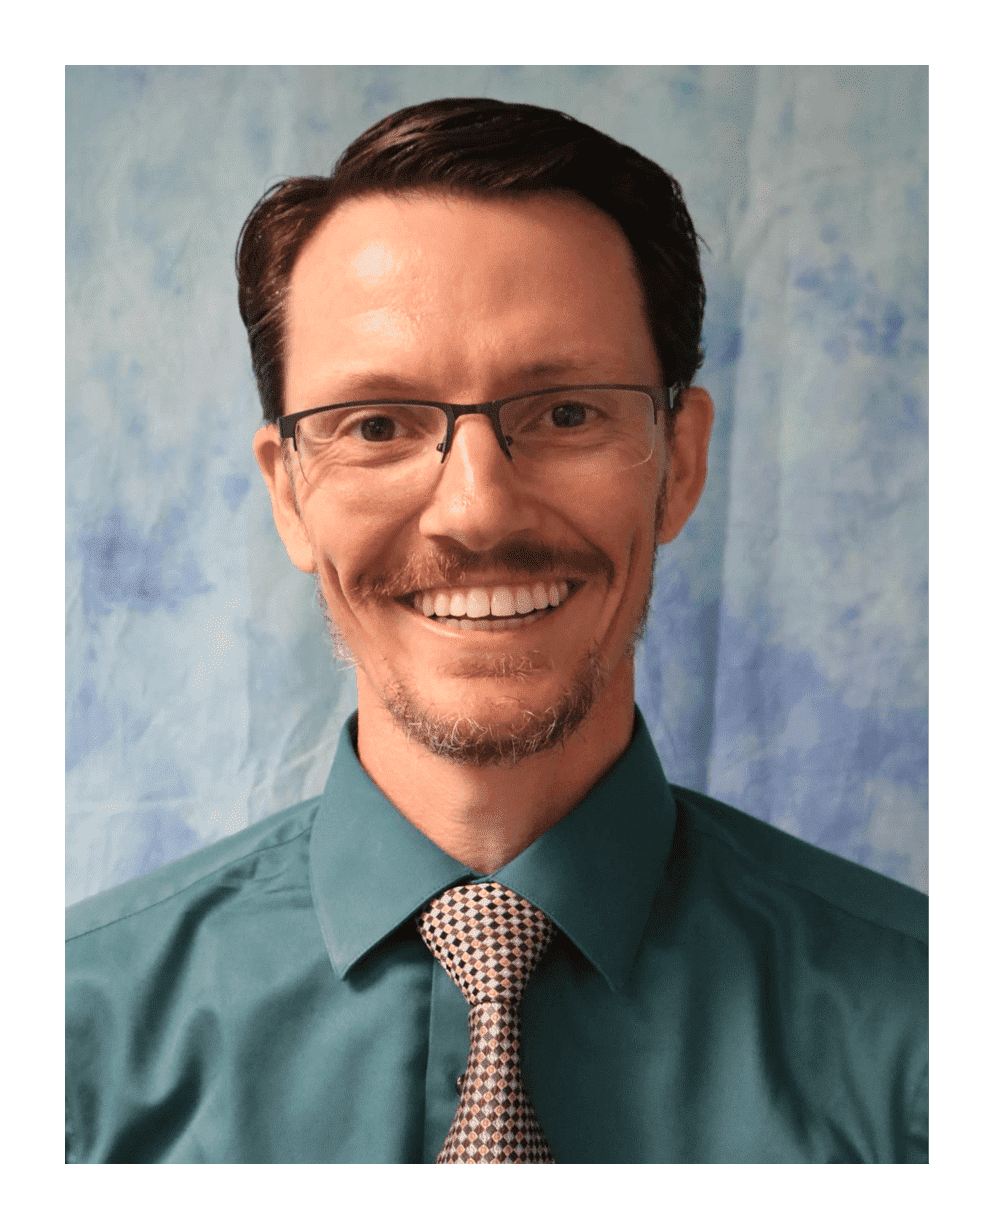 Aaron Daffern. Life Long Educator and Author - TeacherMade User